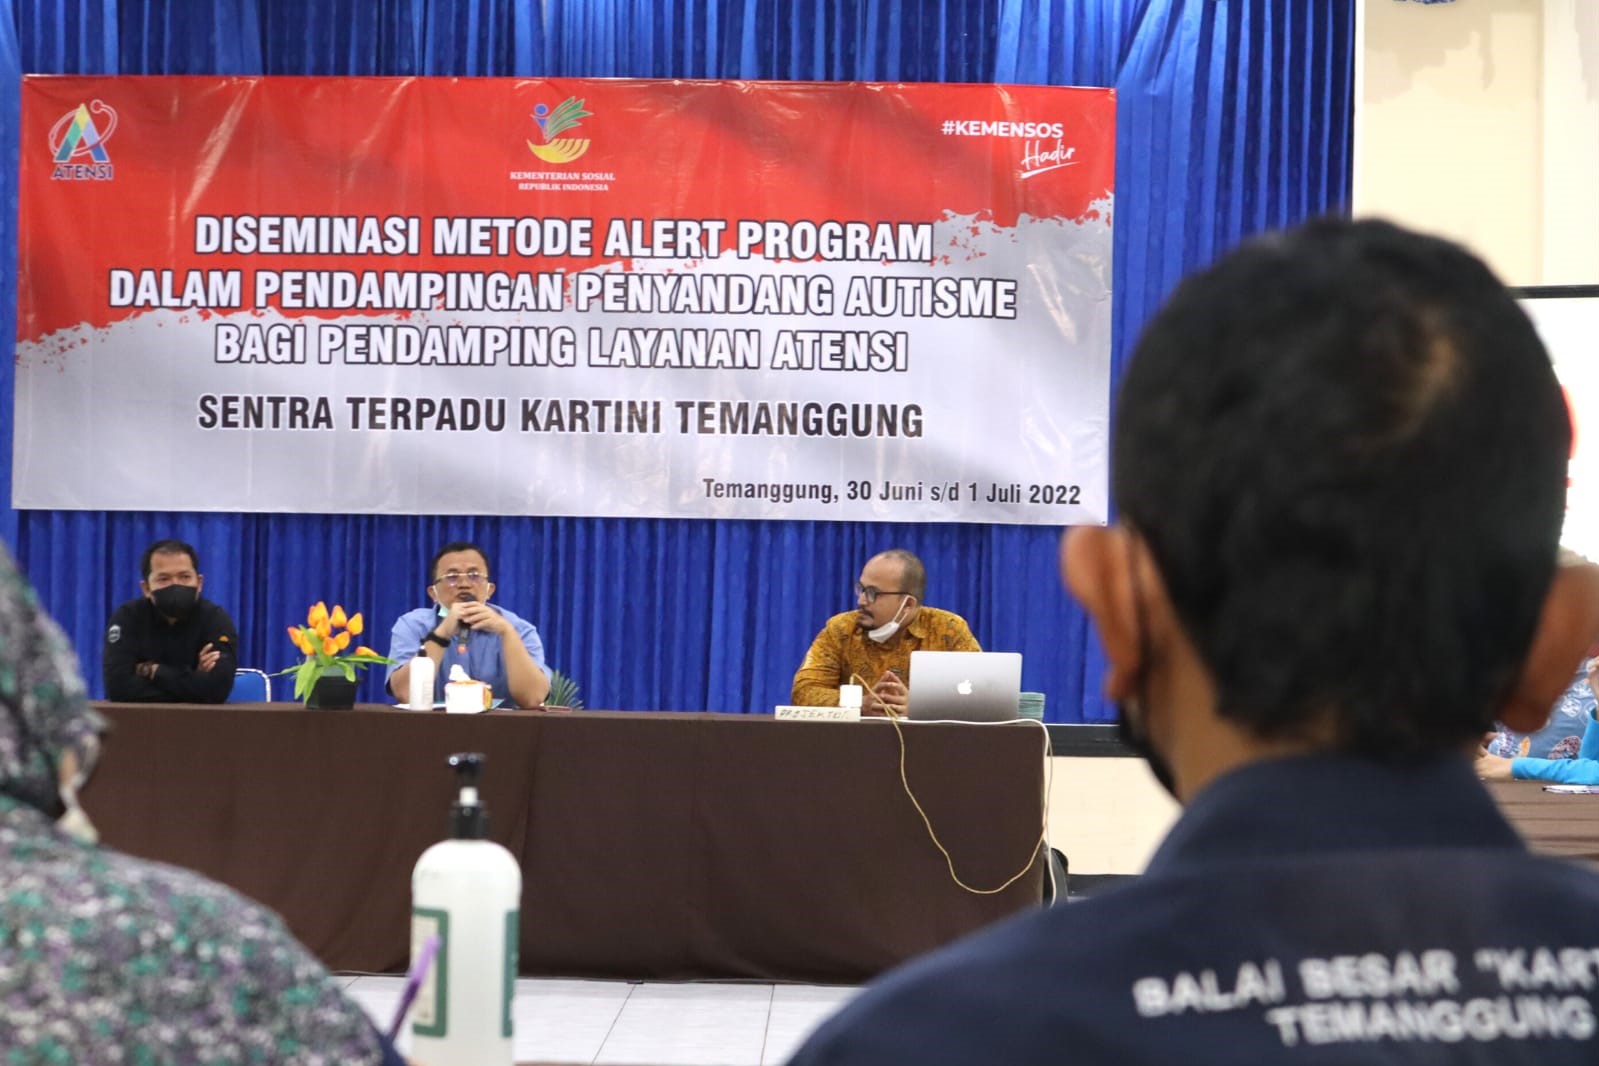 Dissemination of the Alert Program Method at the Kartini Integrated Center Temanggung